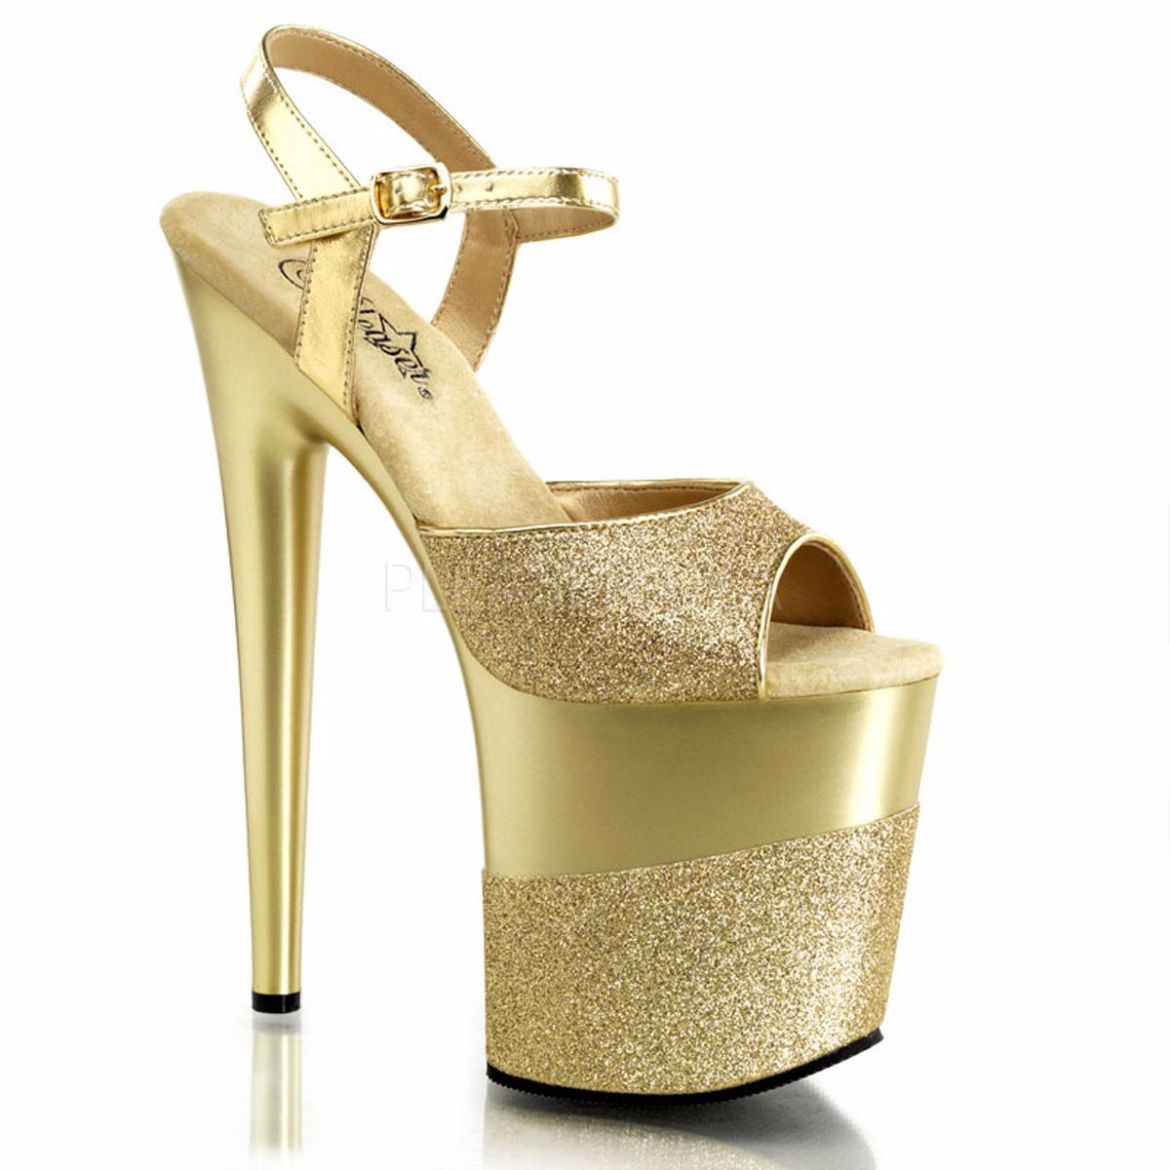 Product image of Pleaser Flamingo-809-2G Gold Glitter/Gold-Glitter, 8 inch (20.3 cm) Heel, 4 inch (10.2 cm) Platform Sandal Shoes